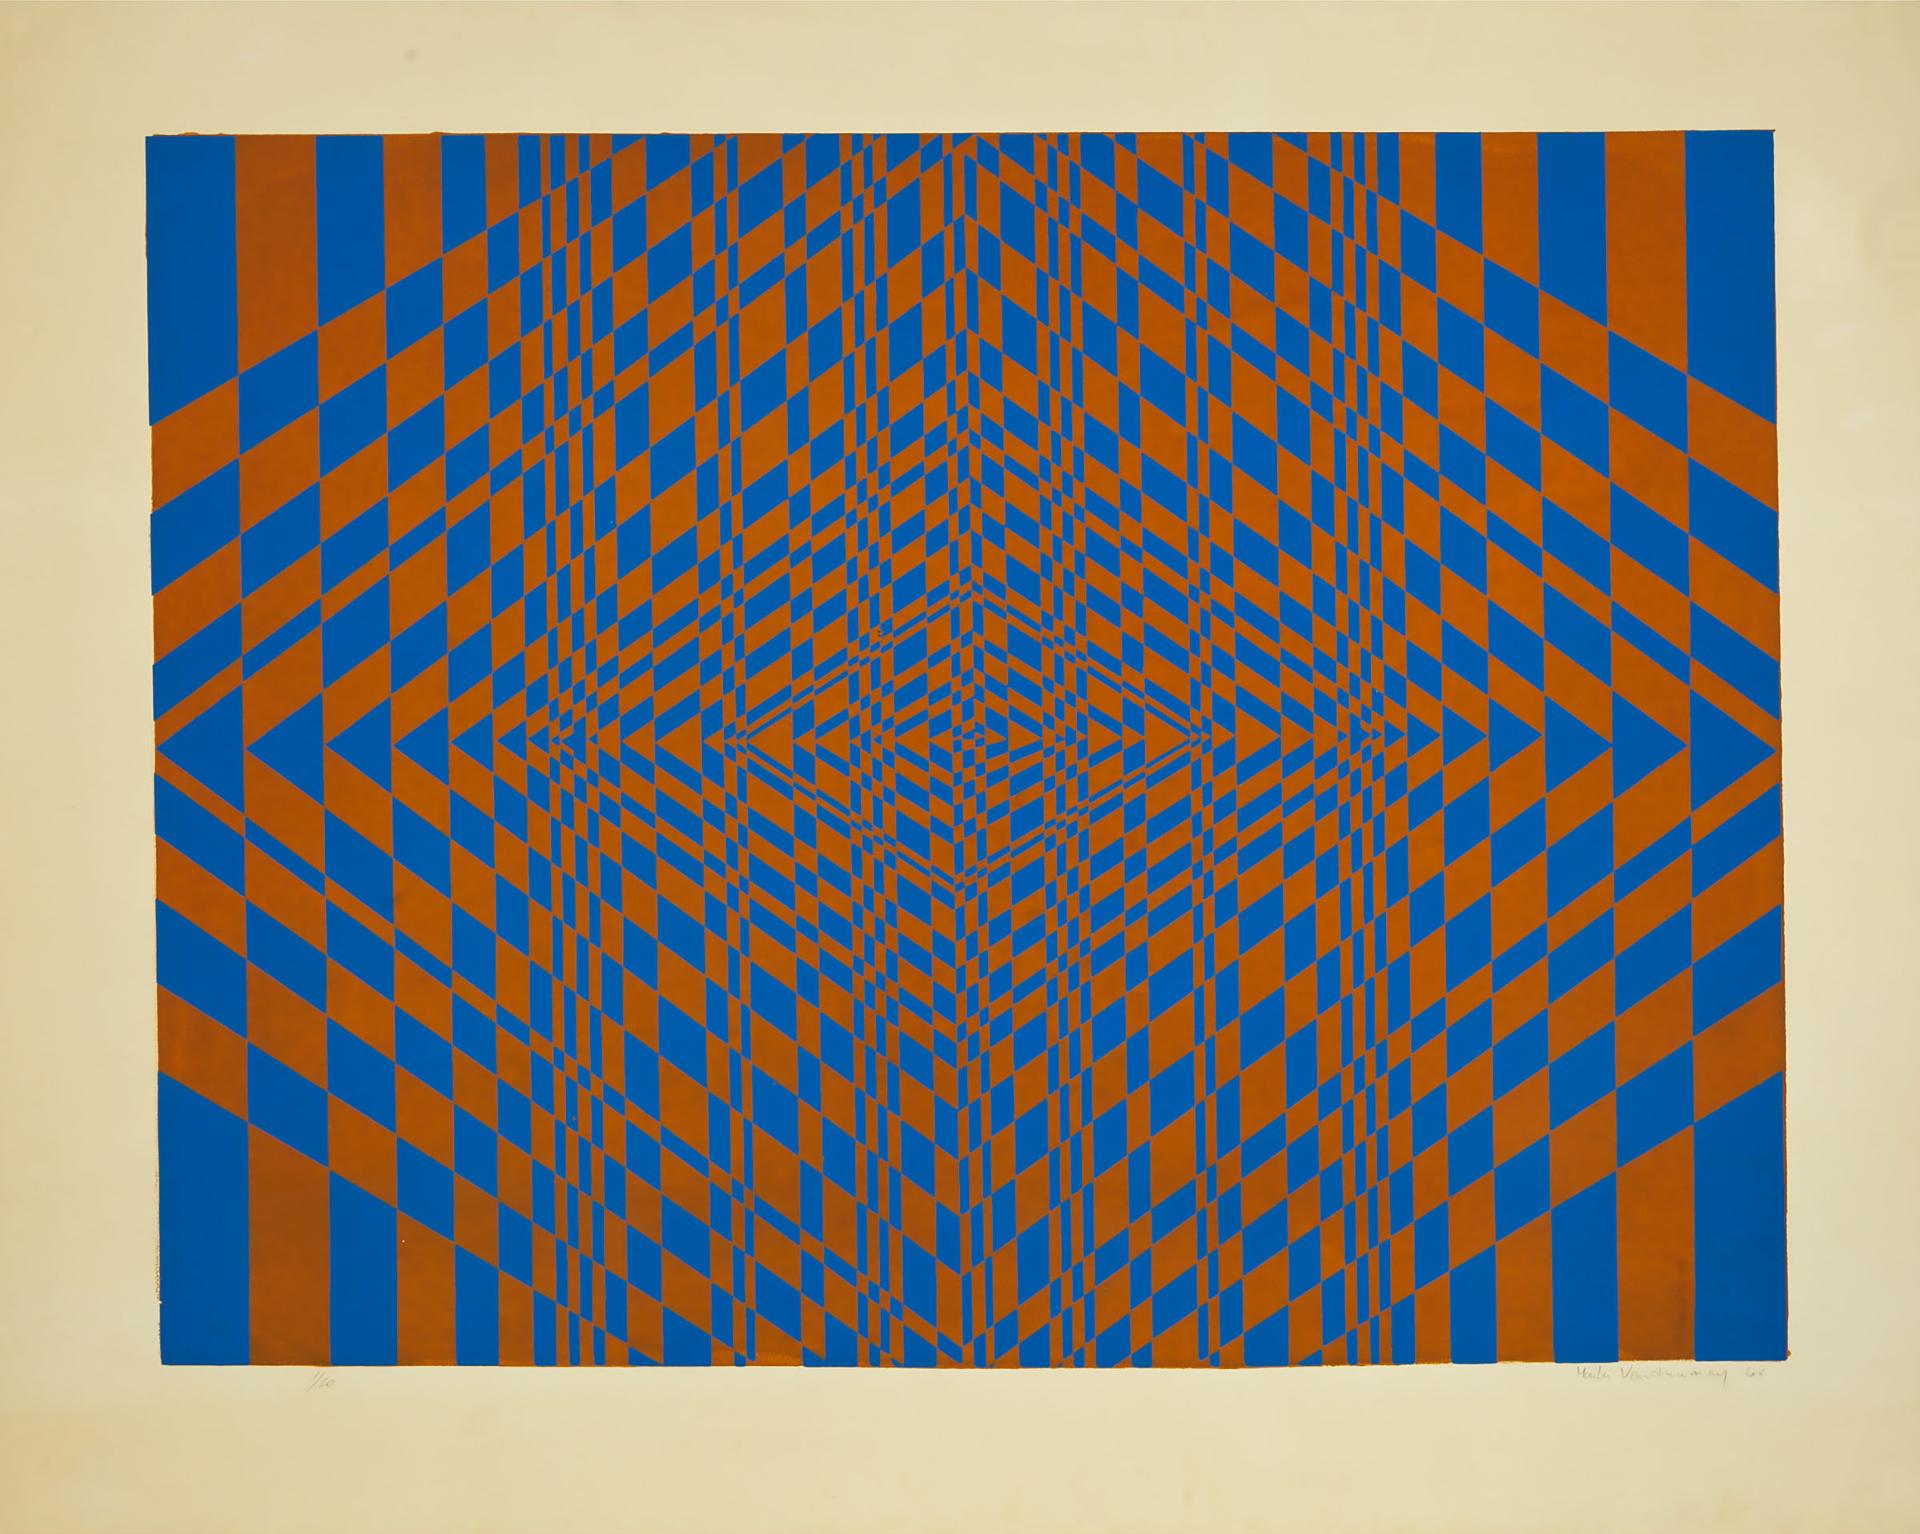 Robert Van der May (1943-2015) - Untitled (Optic Print), 1964